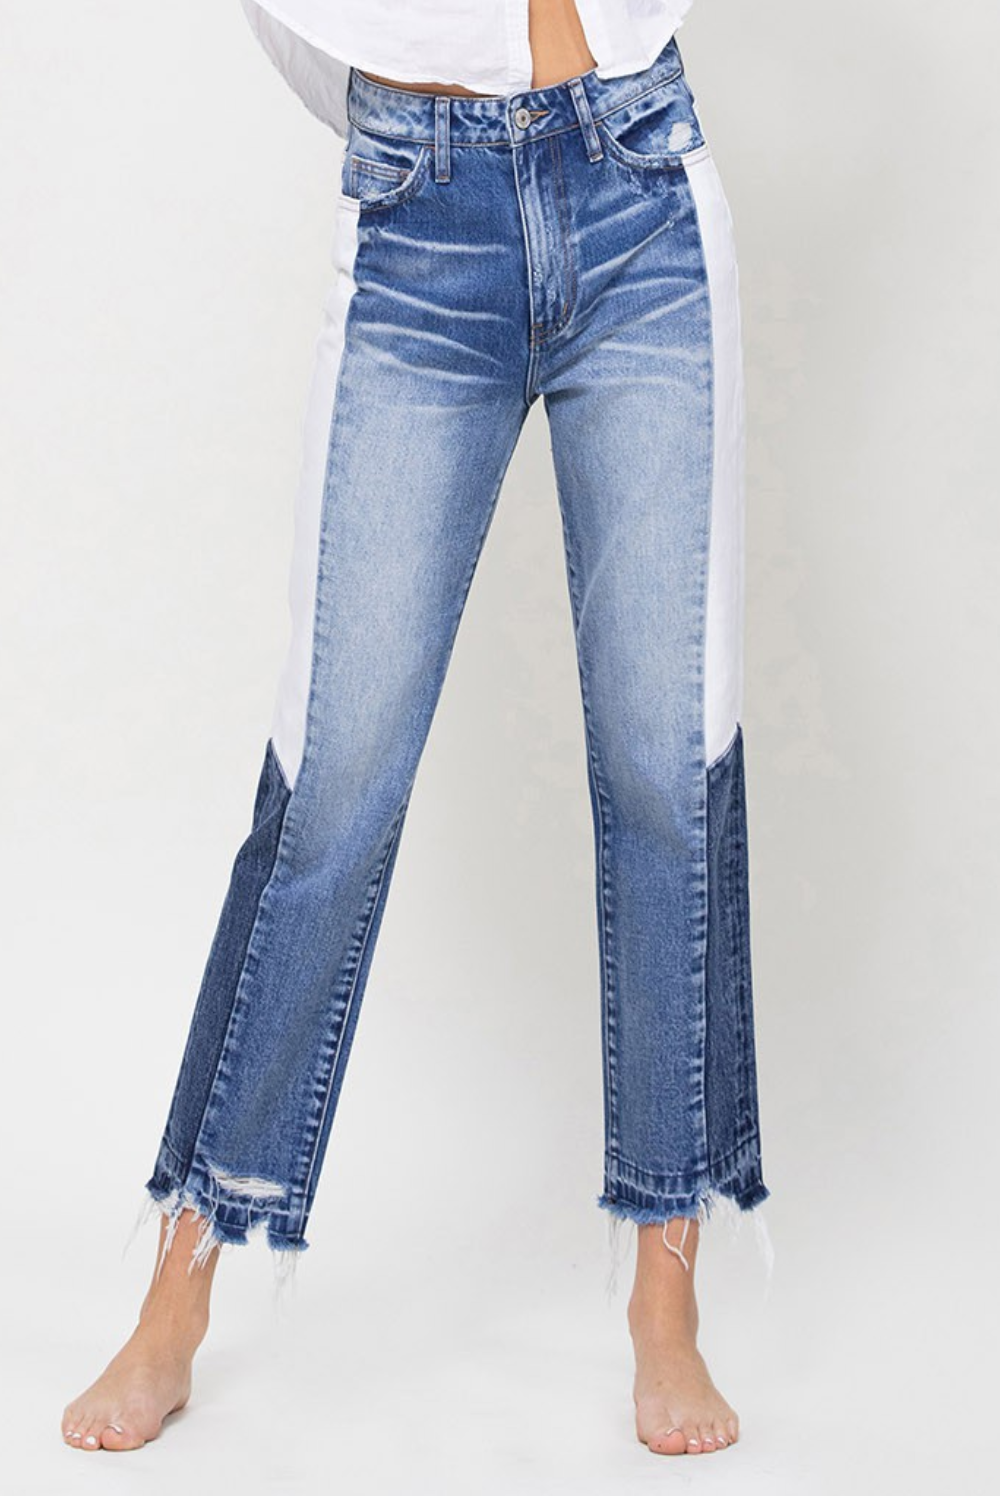 VERVET Tallulah Sky Super High Rise Side Blocking Panel Straight Cropped Jeans